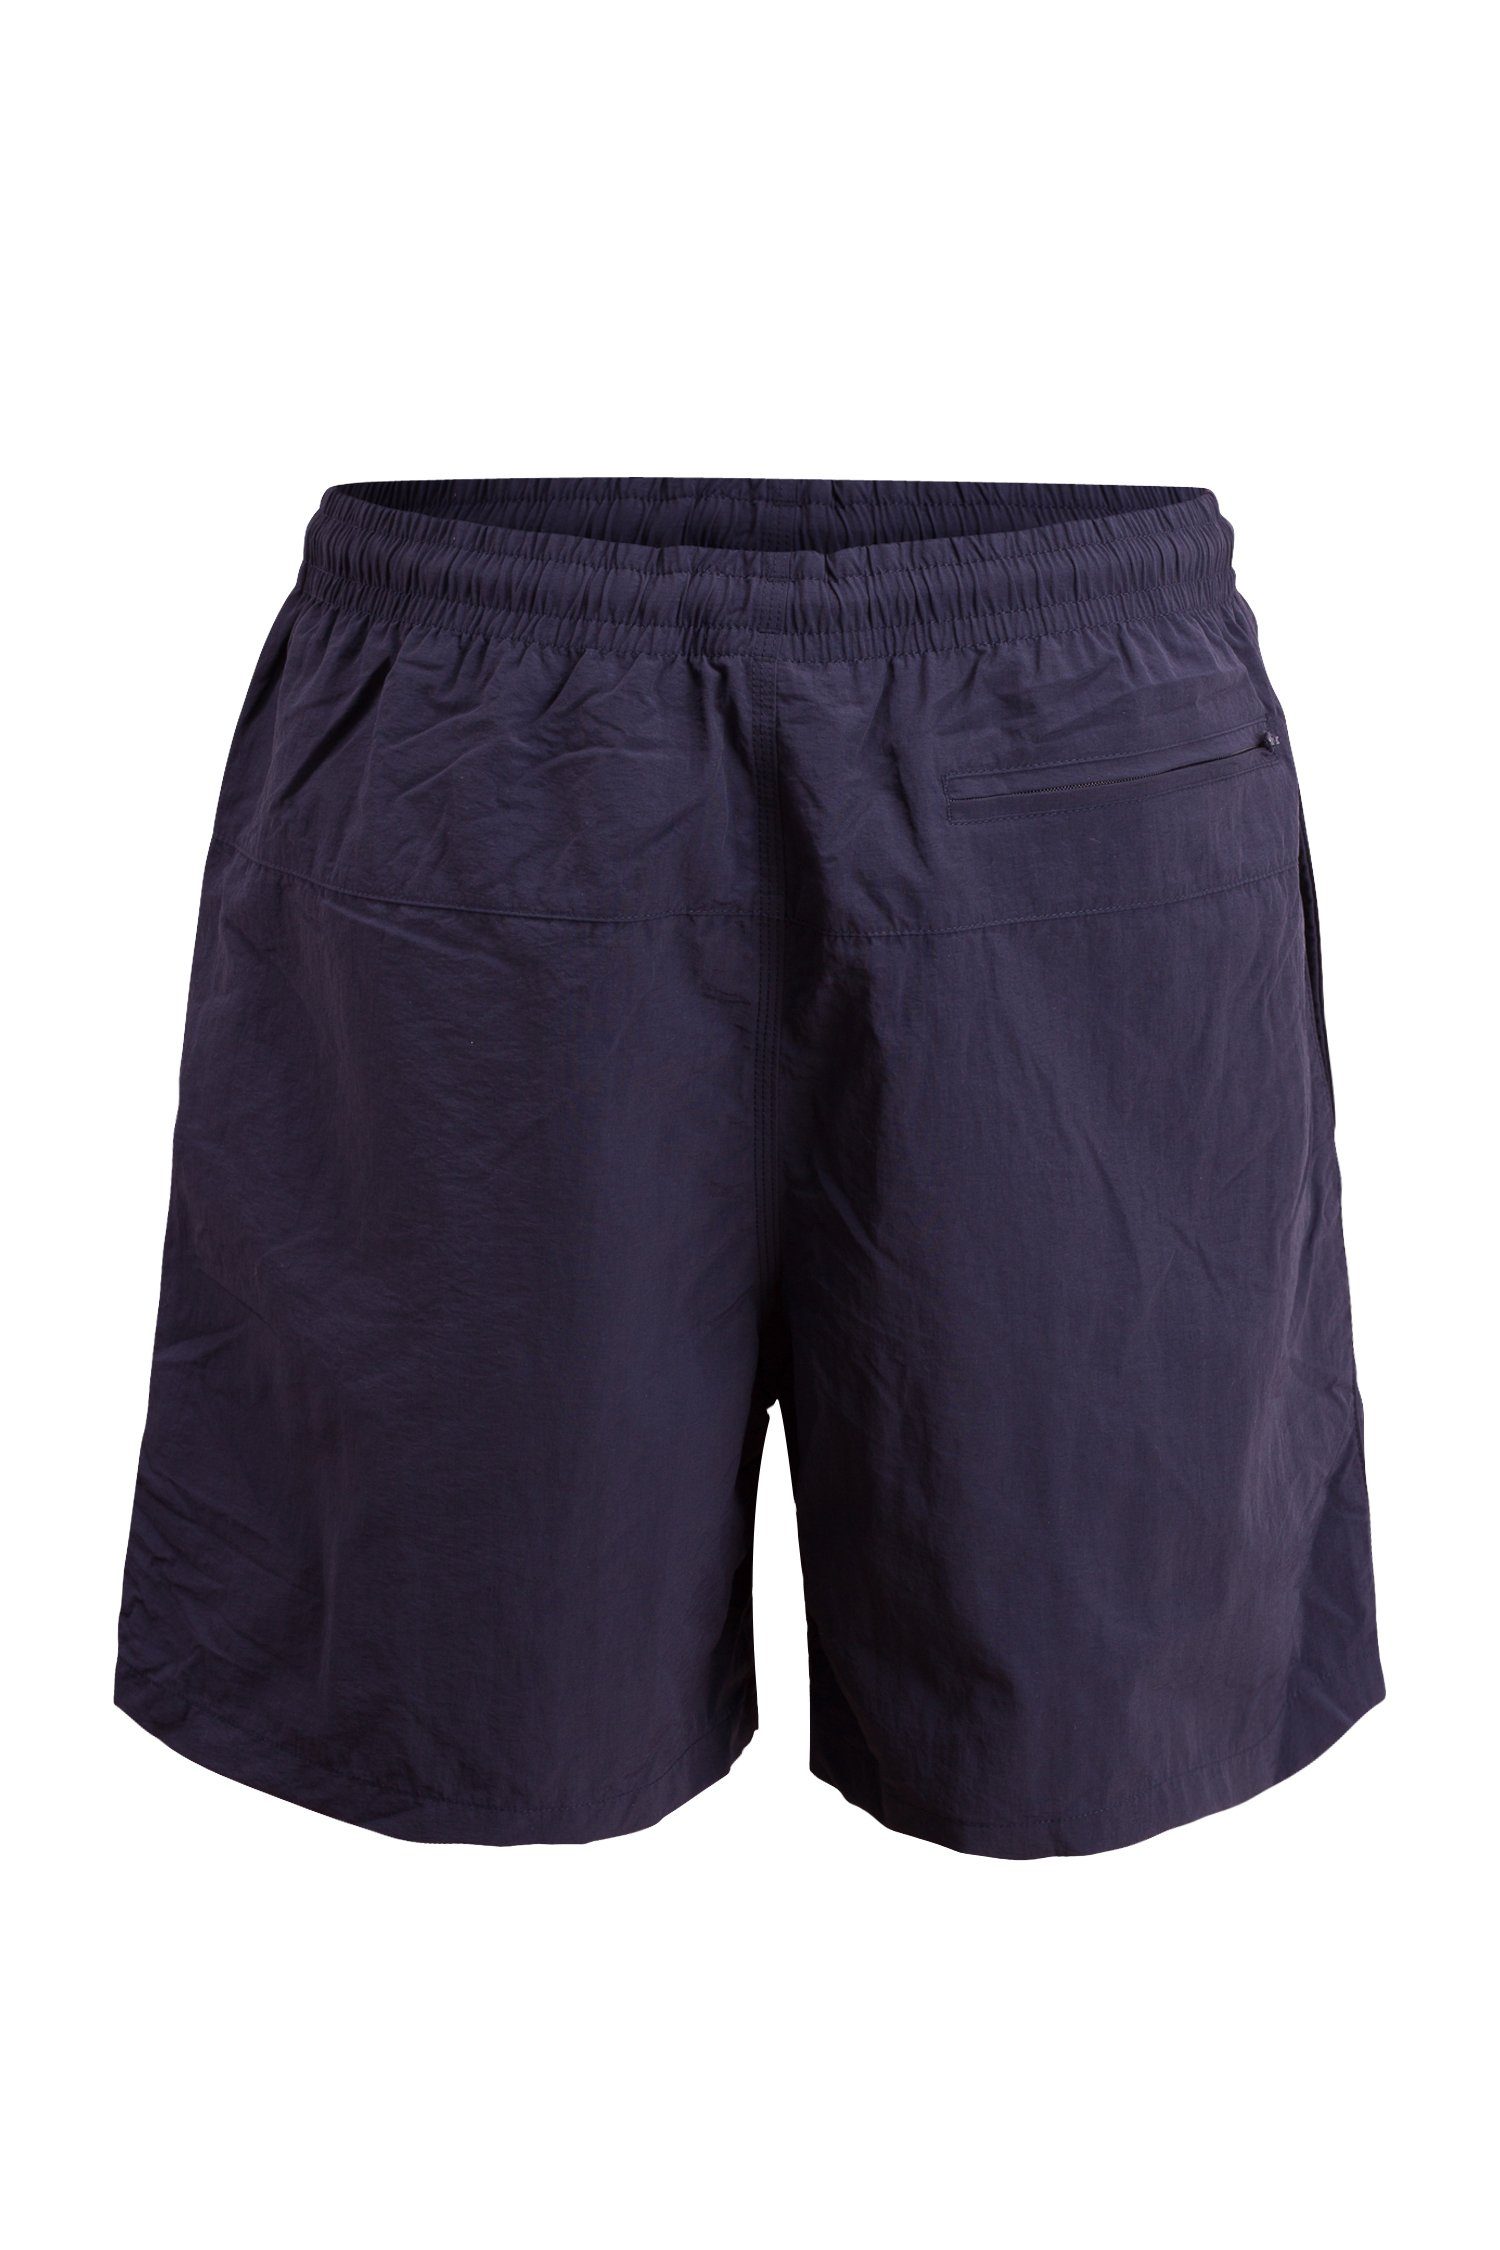 Badehosen Navy Manufaktur13 Shorts Badeshorts schnelltrocknend - Swim